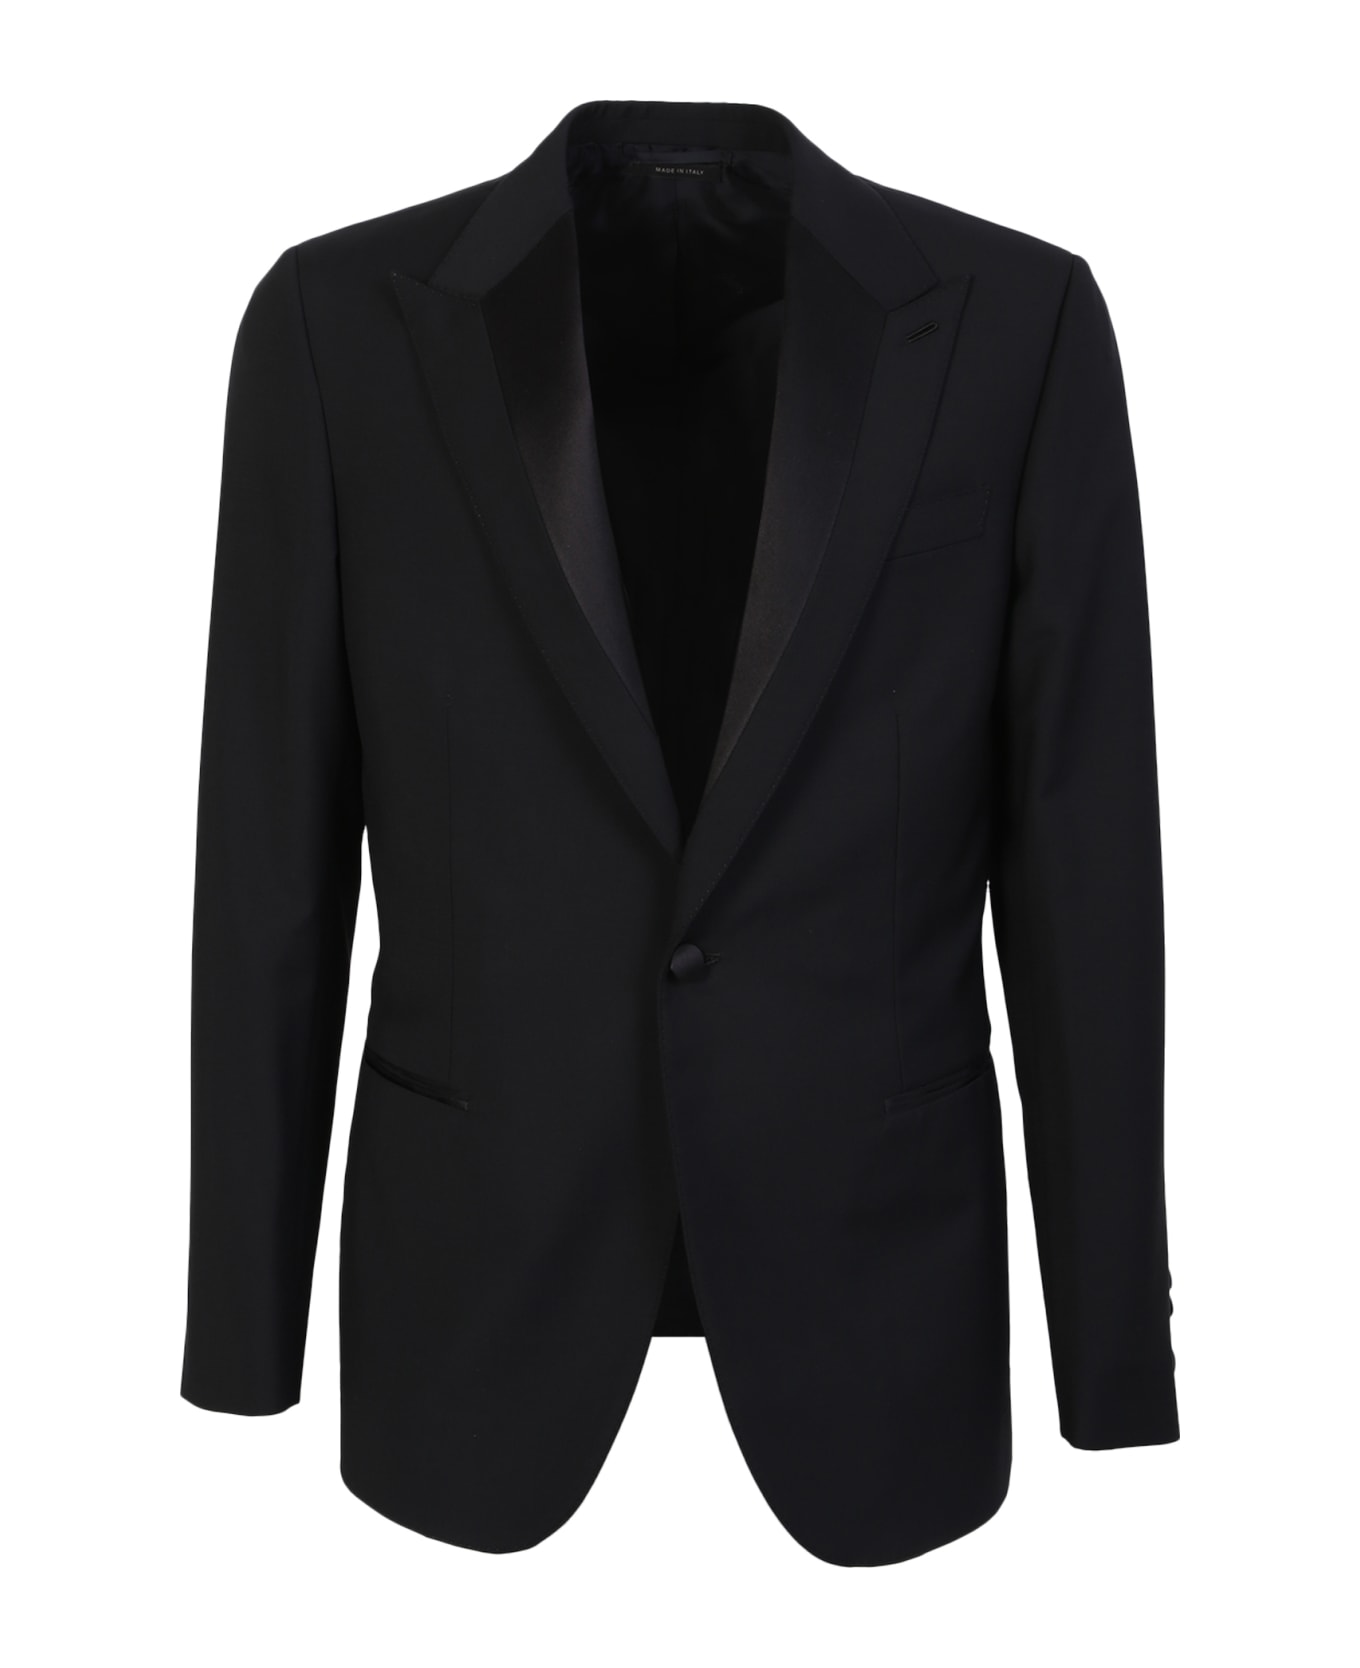 Brioni Perseo Black Dinner Suit - Black